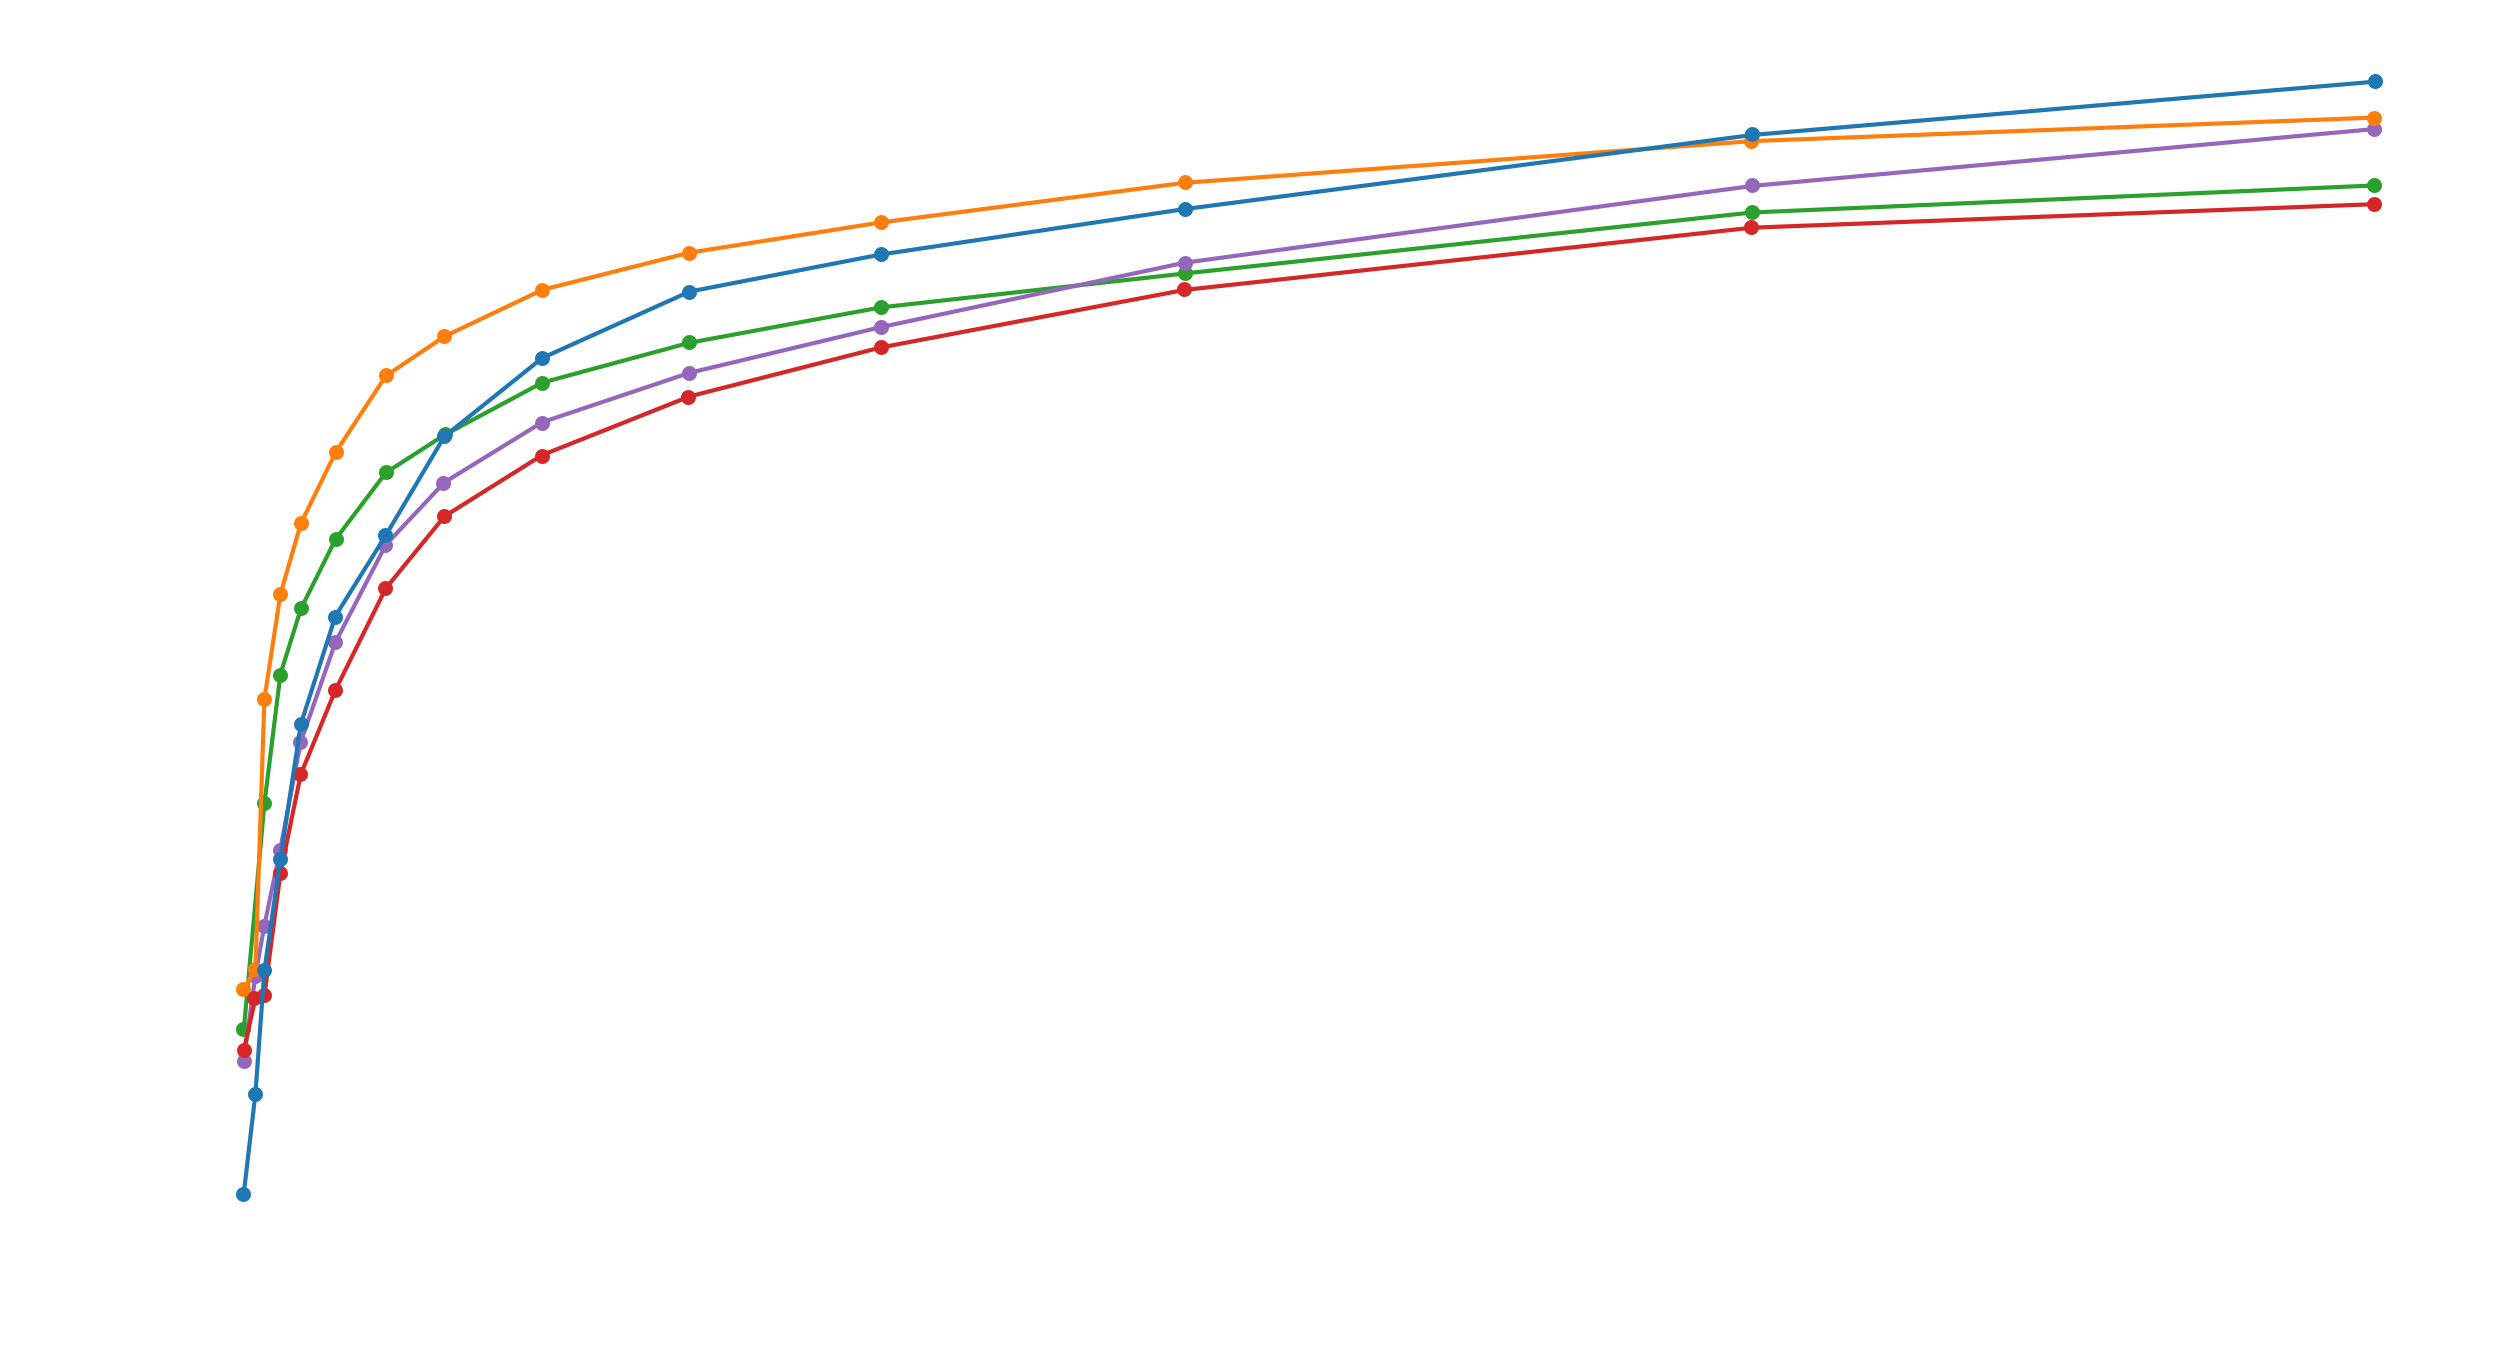 Piano calibration curves graph